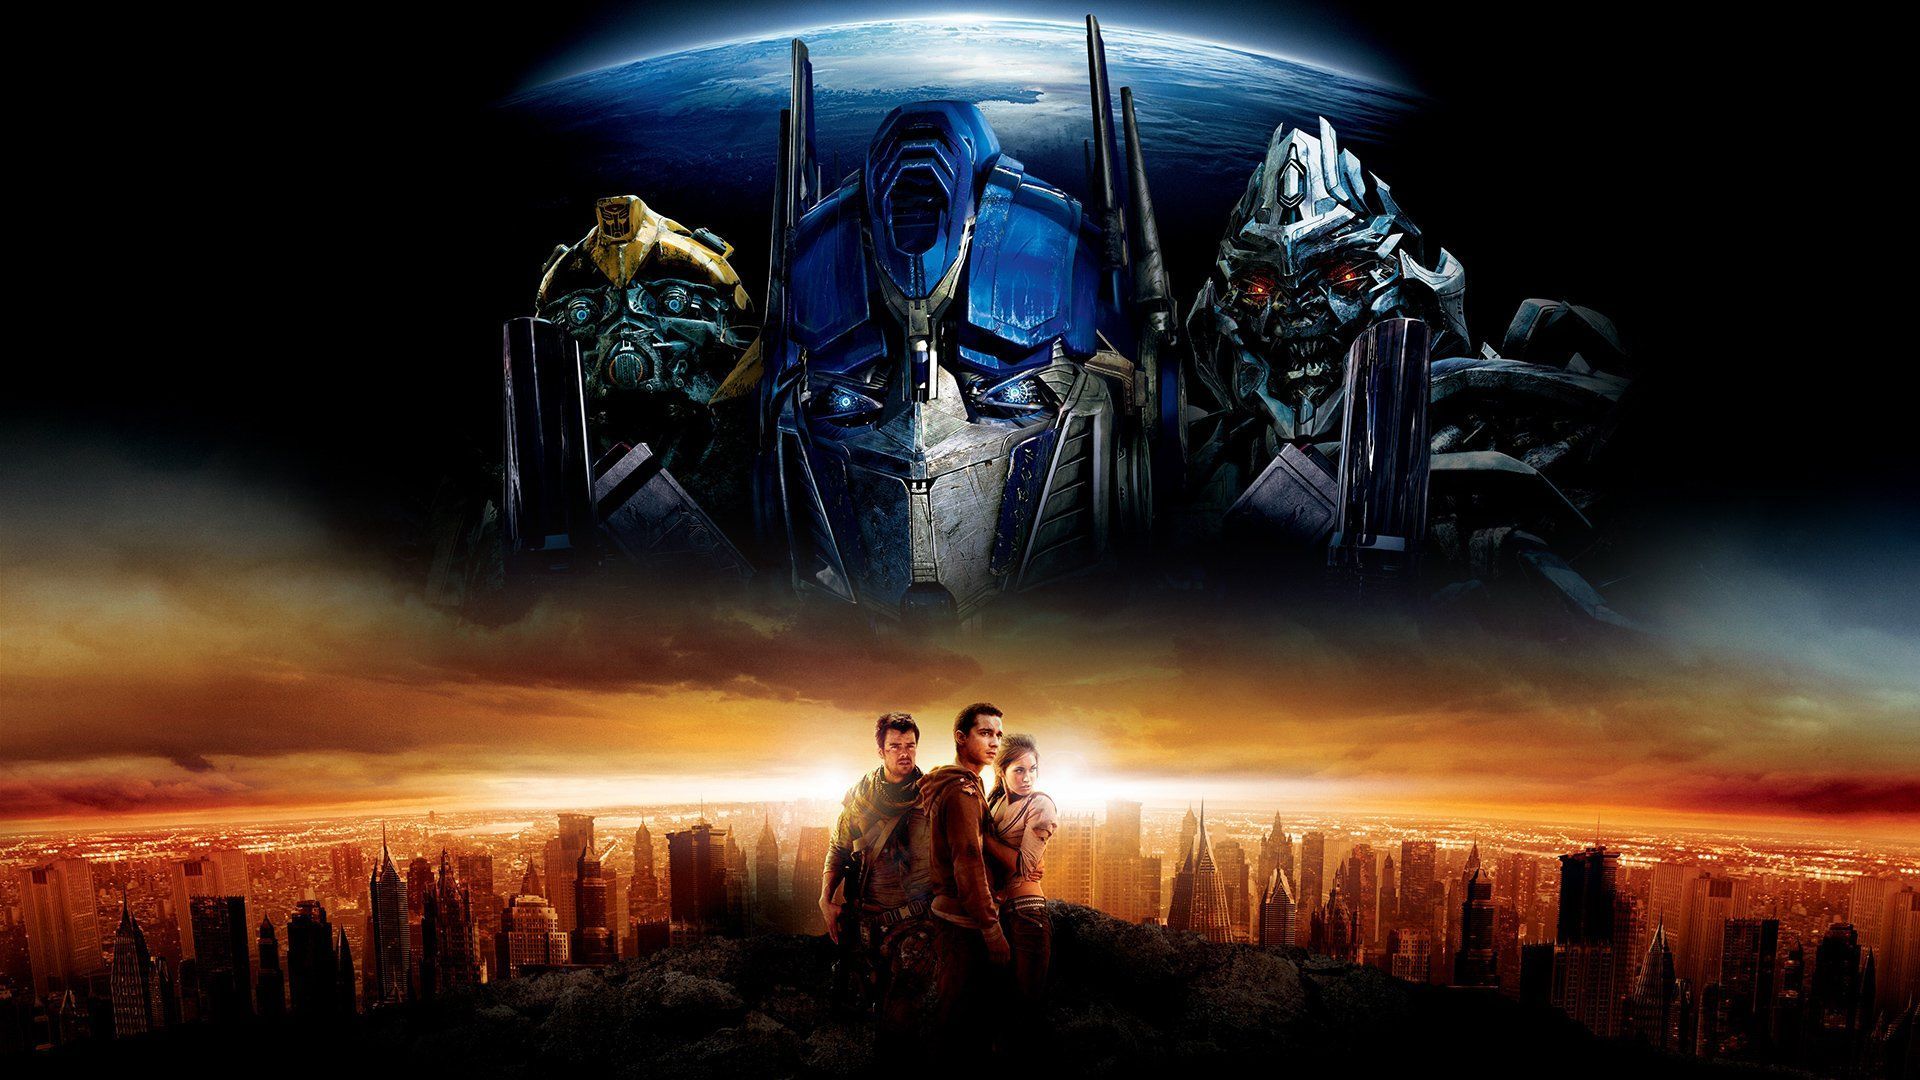 Movie Transformers Wallpaper. Transformers movie, Transformers poster, Transformers